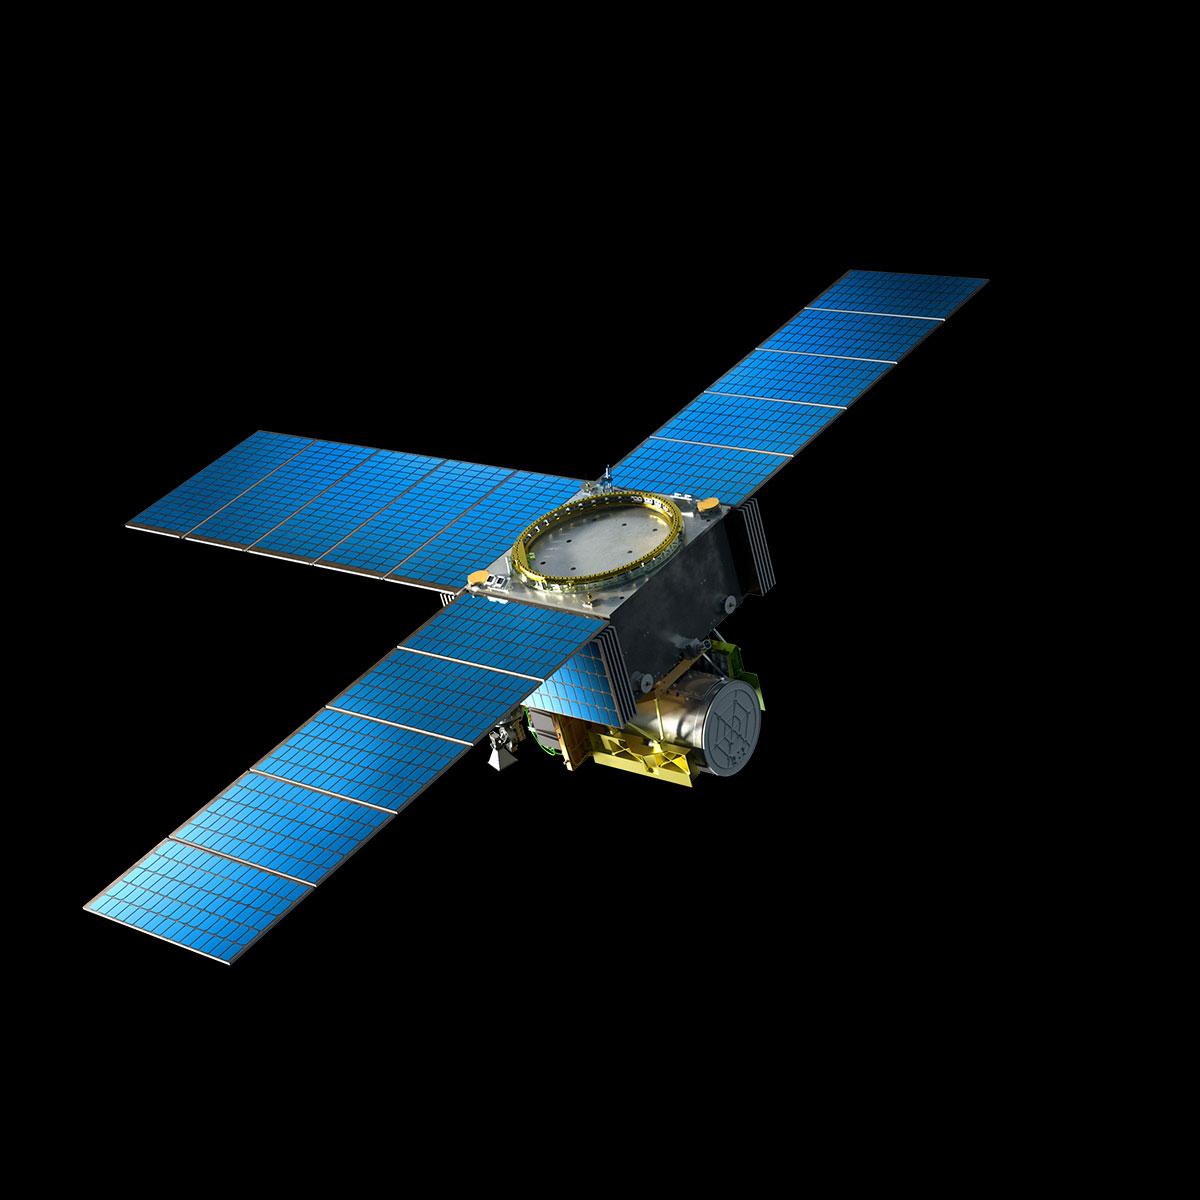 NASA’s Multi-Angle Imager for Aerosols (MAIA) instrument